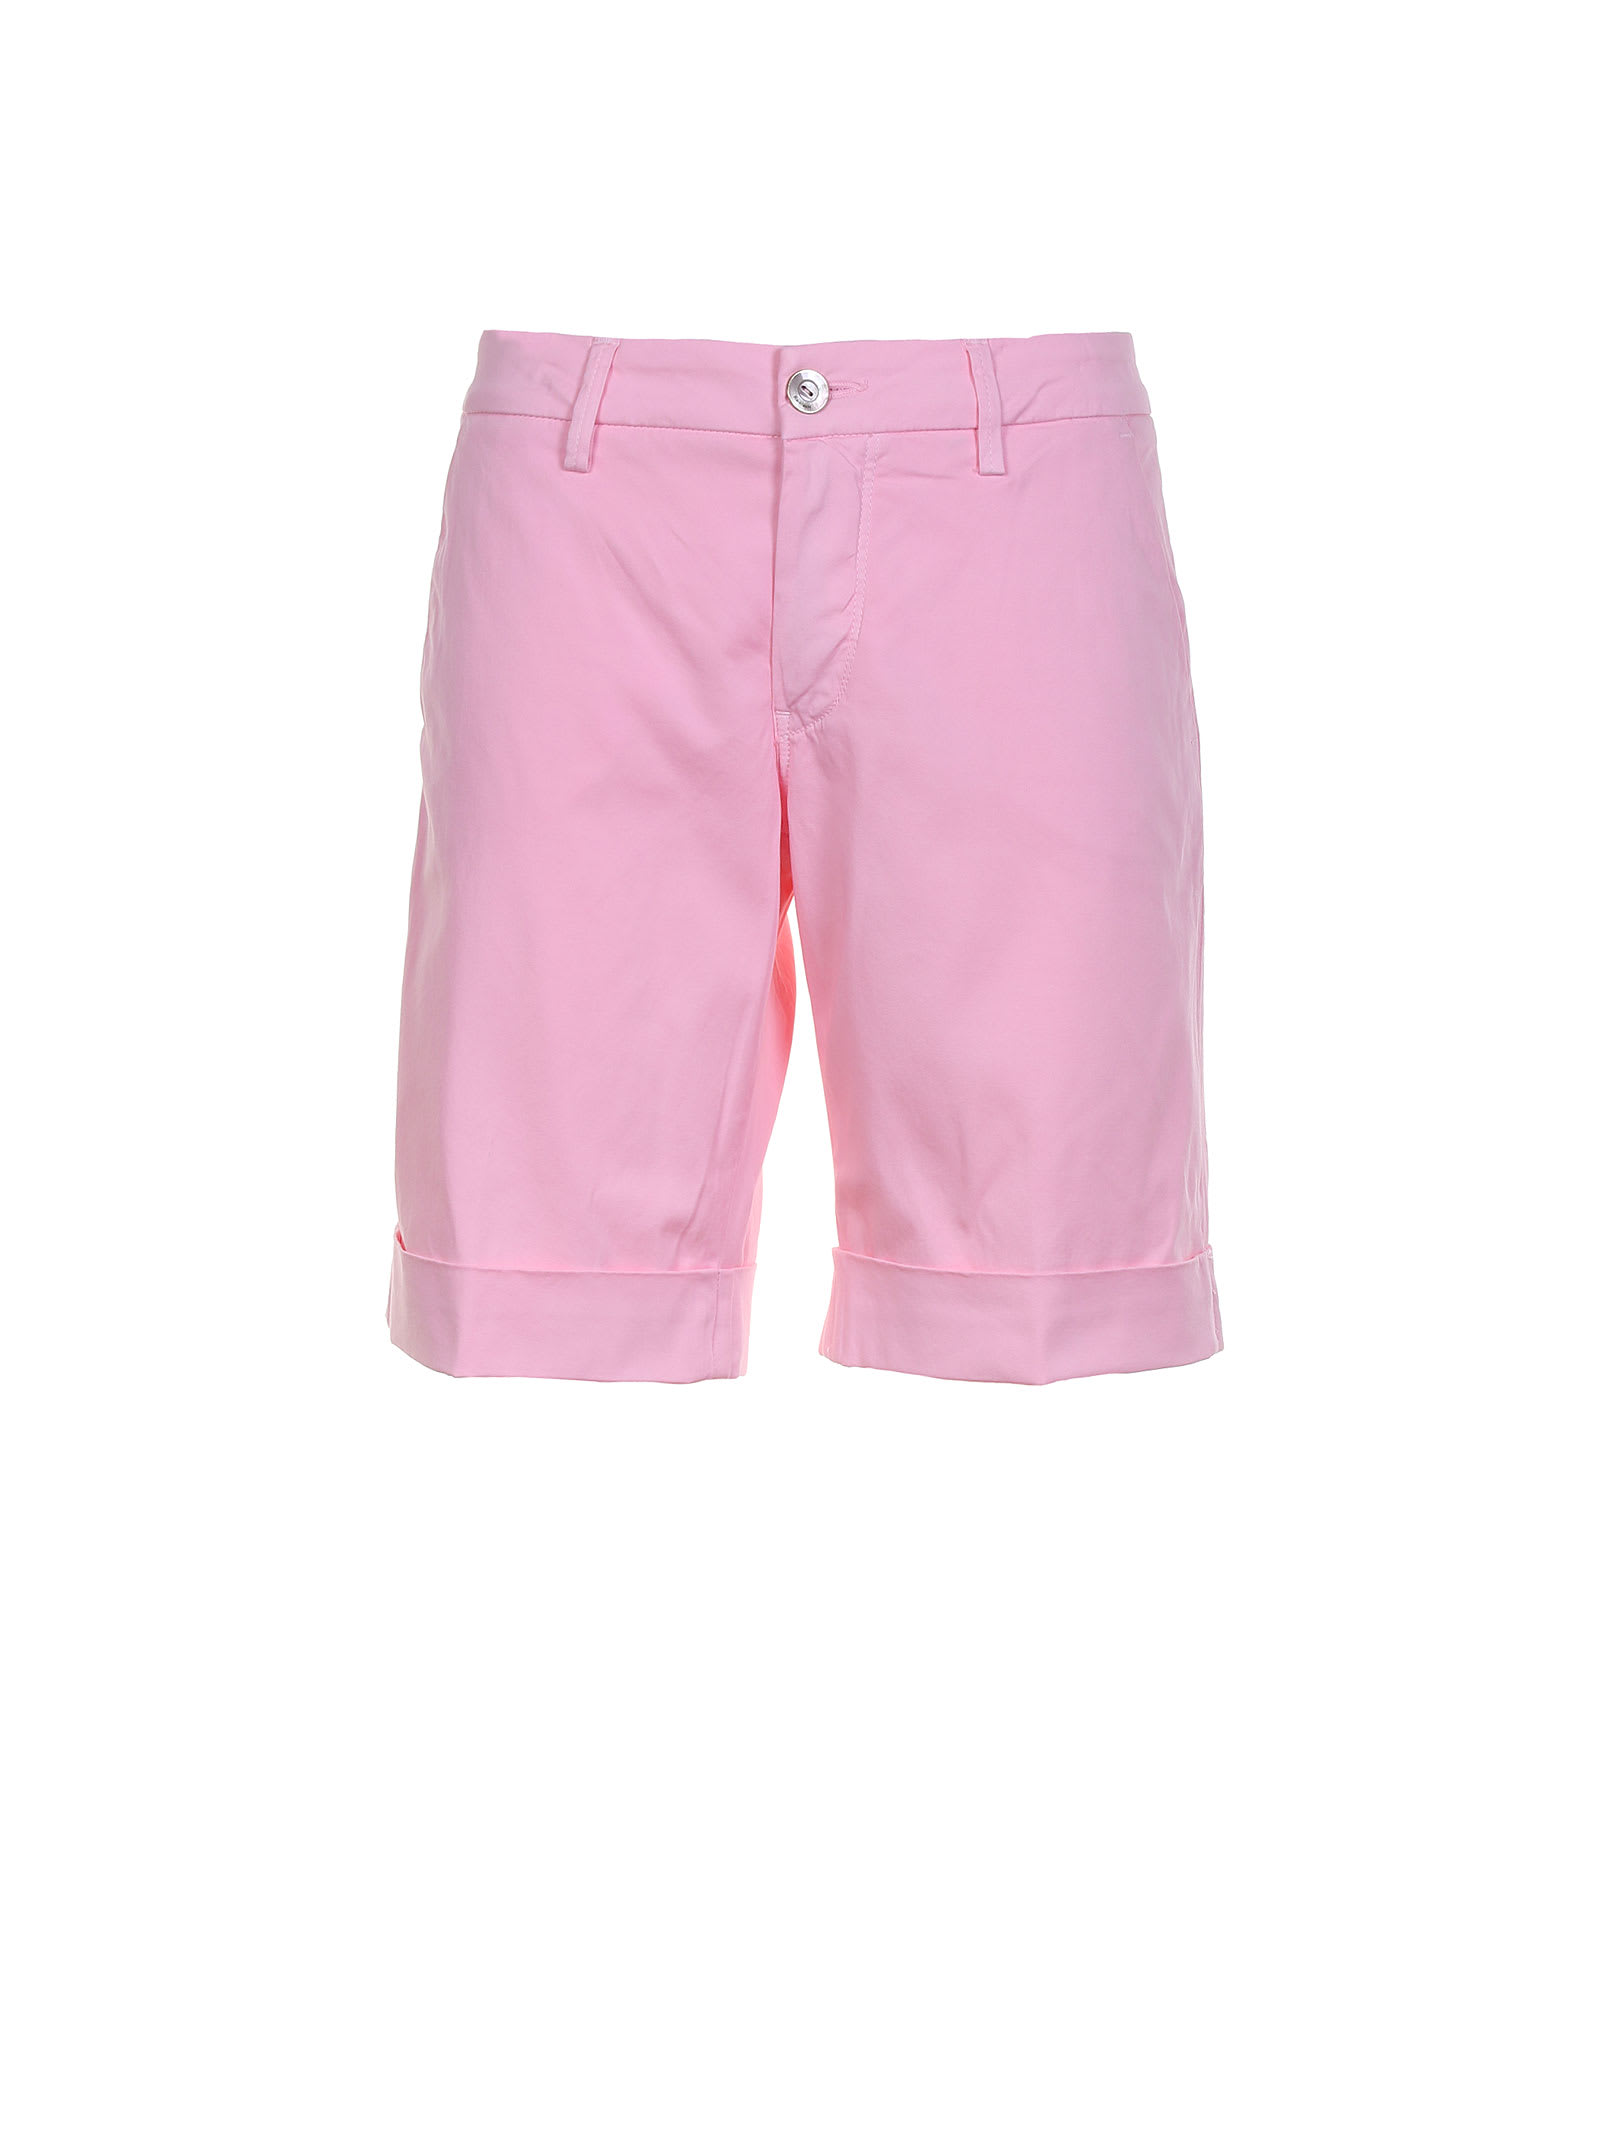 Re-HasH Bermuda Shorts Pink